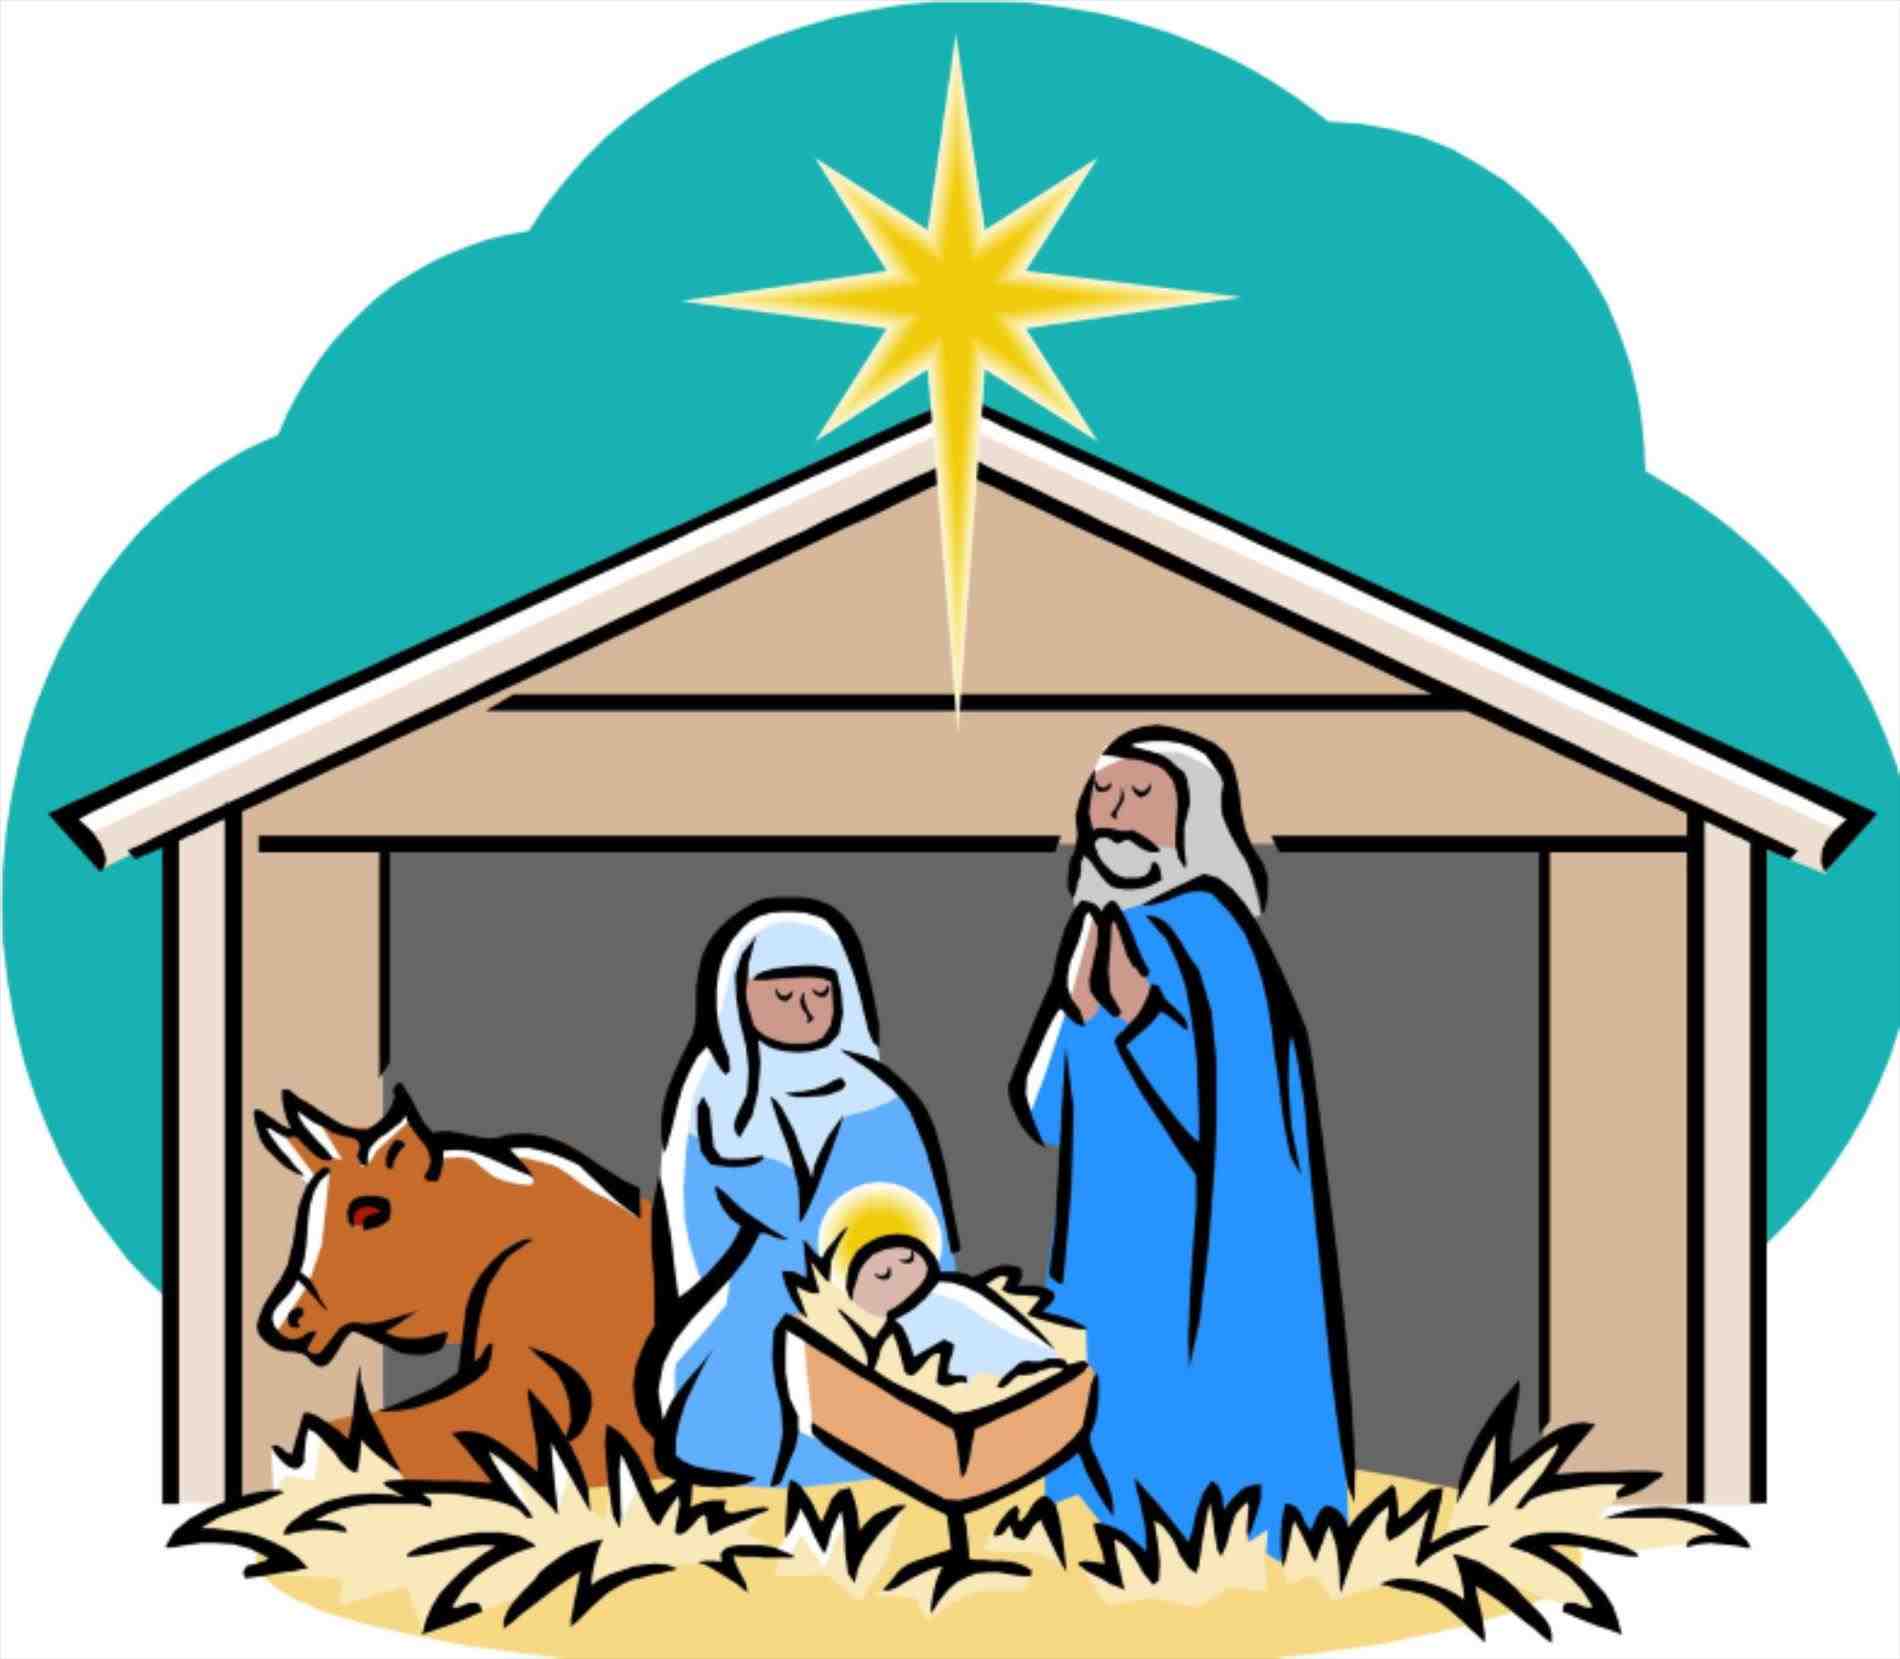 Nativity scene clipart.